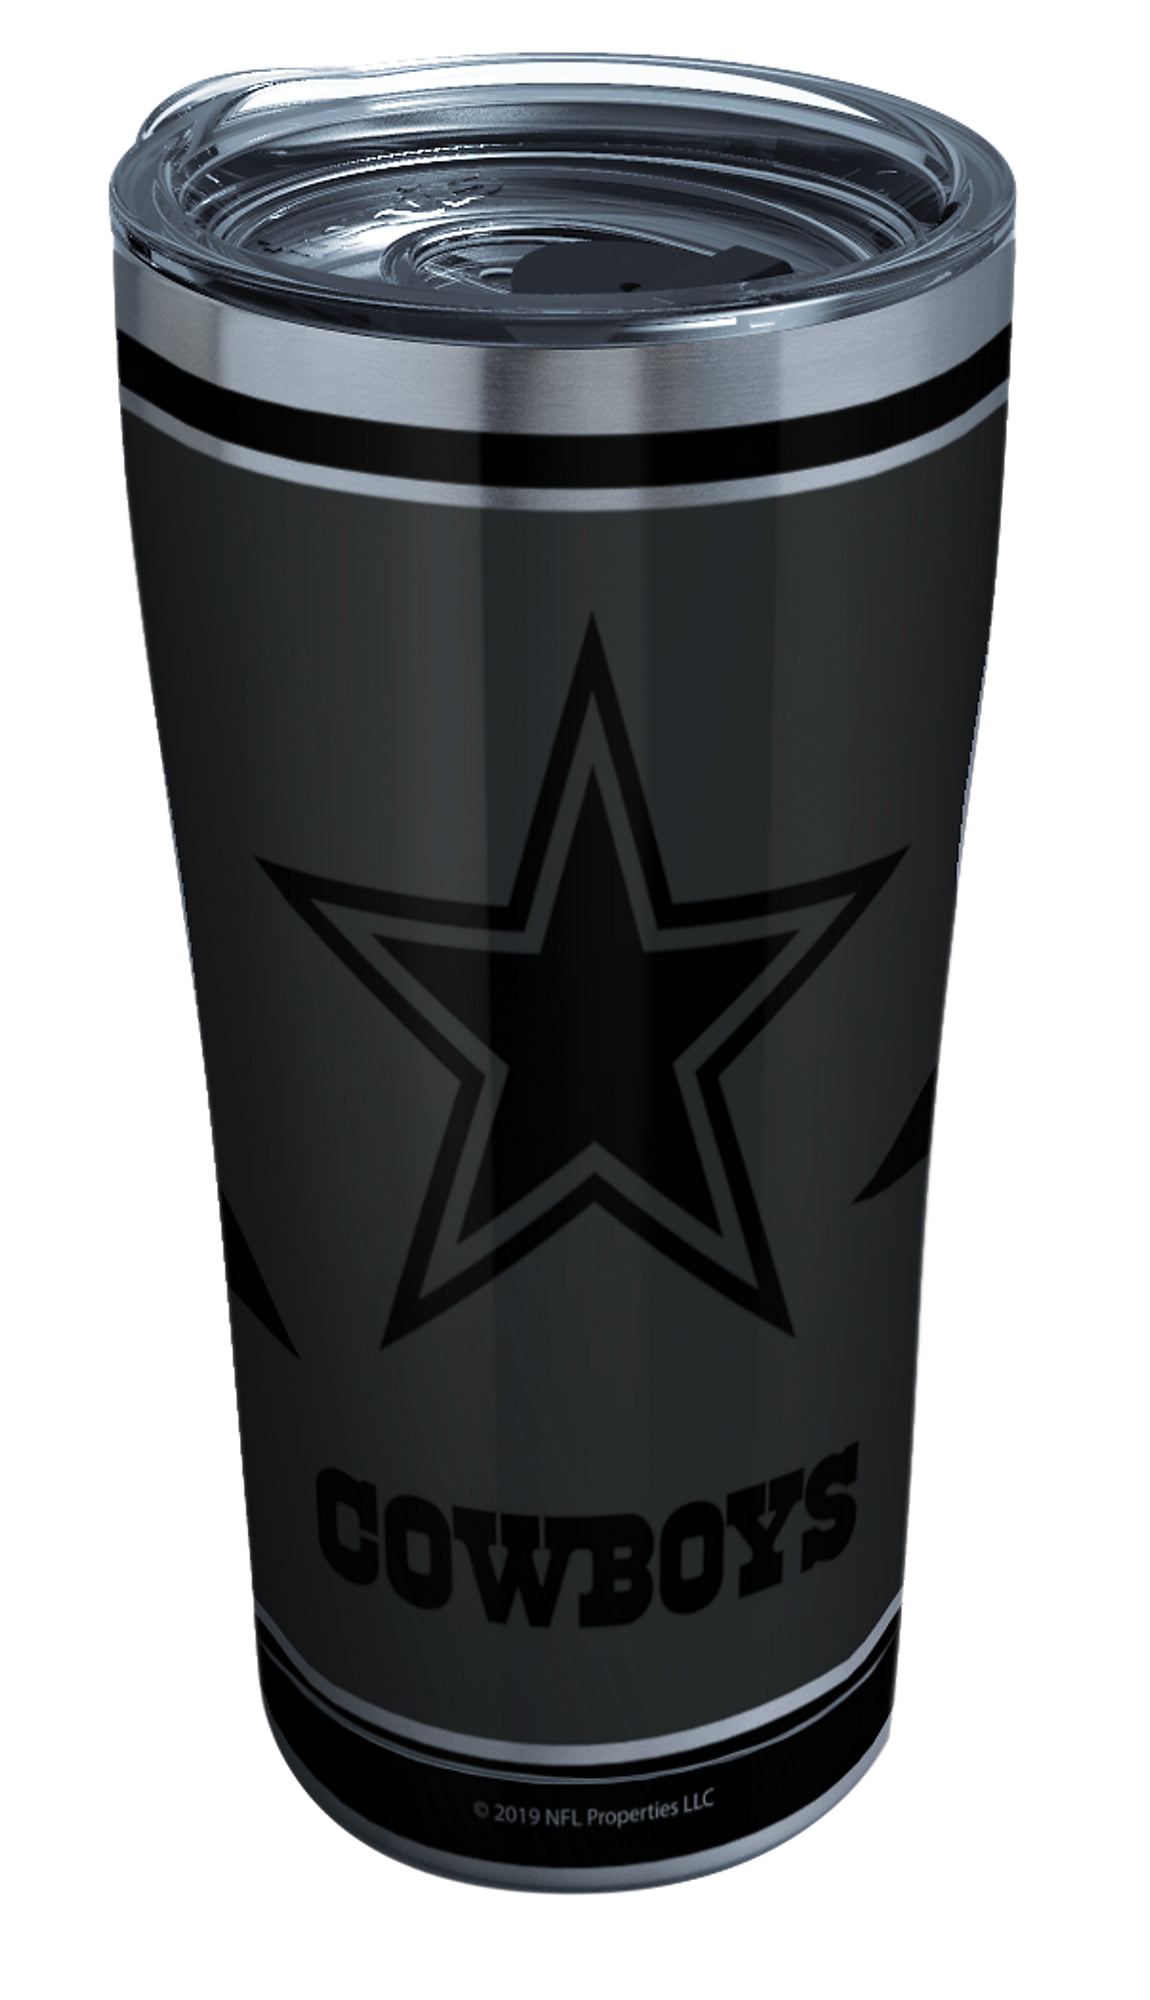 Custom Dallas cowboys rtic  Cowboy gifts, Yeti cup designs, Dallas cowboys  decor